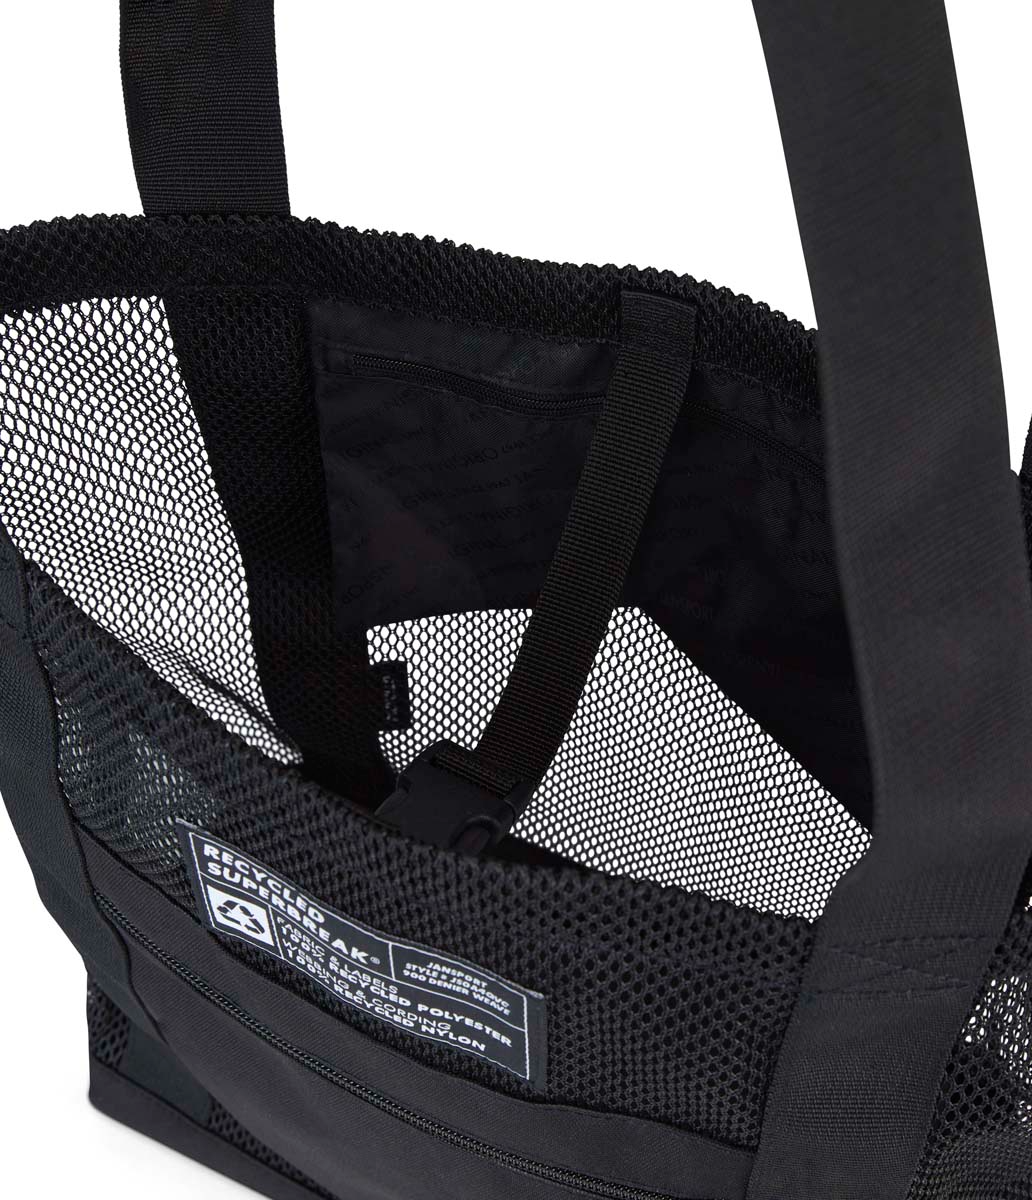 JanSport Recycled Tote Bag Black